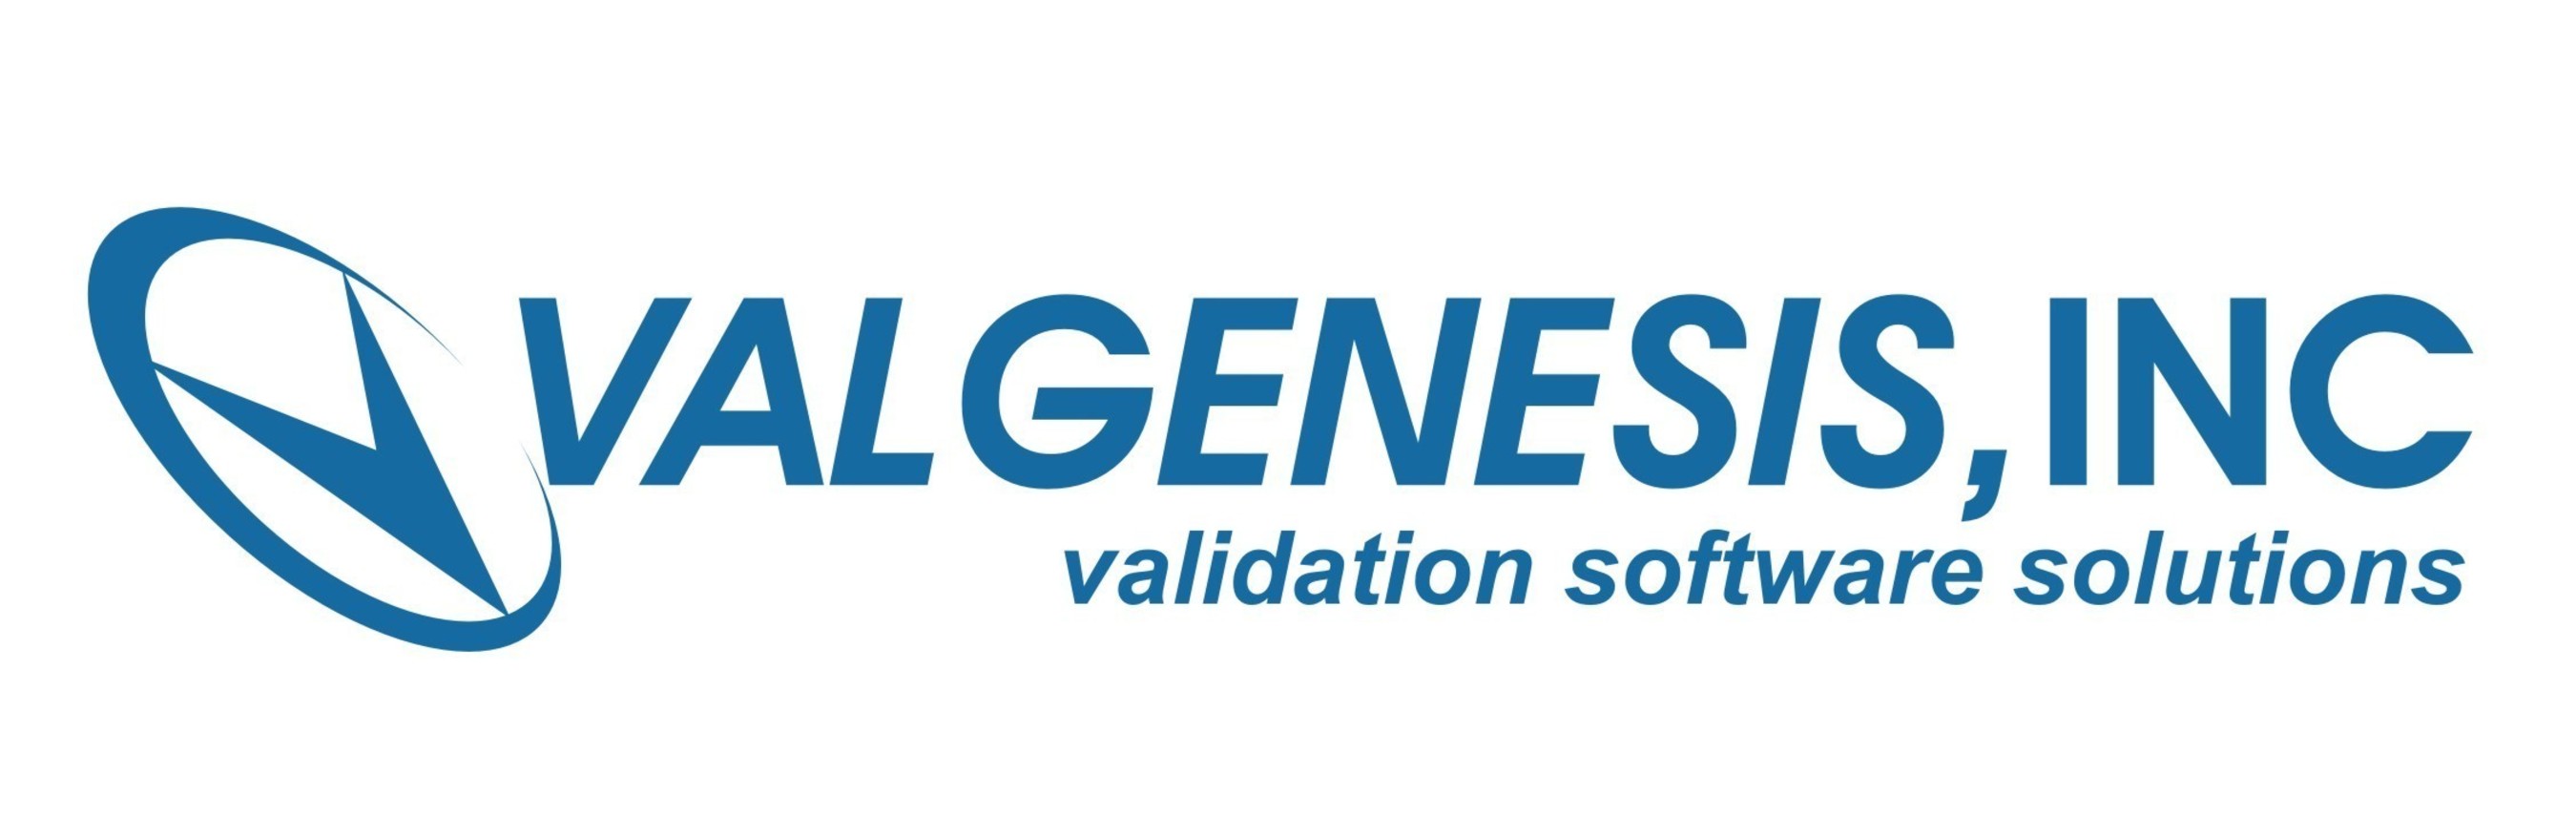 ValGenesis Logo (PRNewsFoto/ValGenesis Inc.)